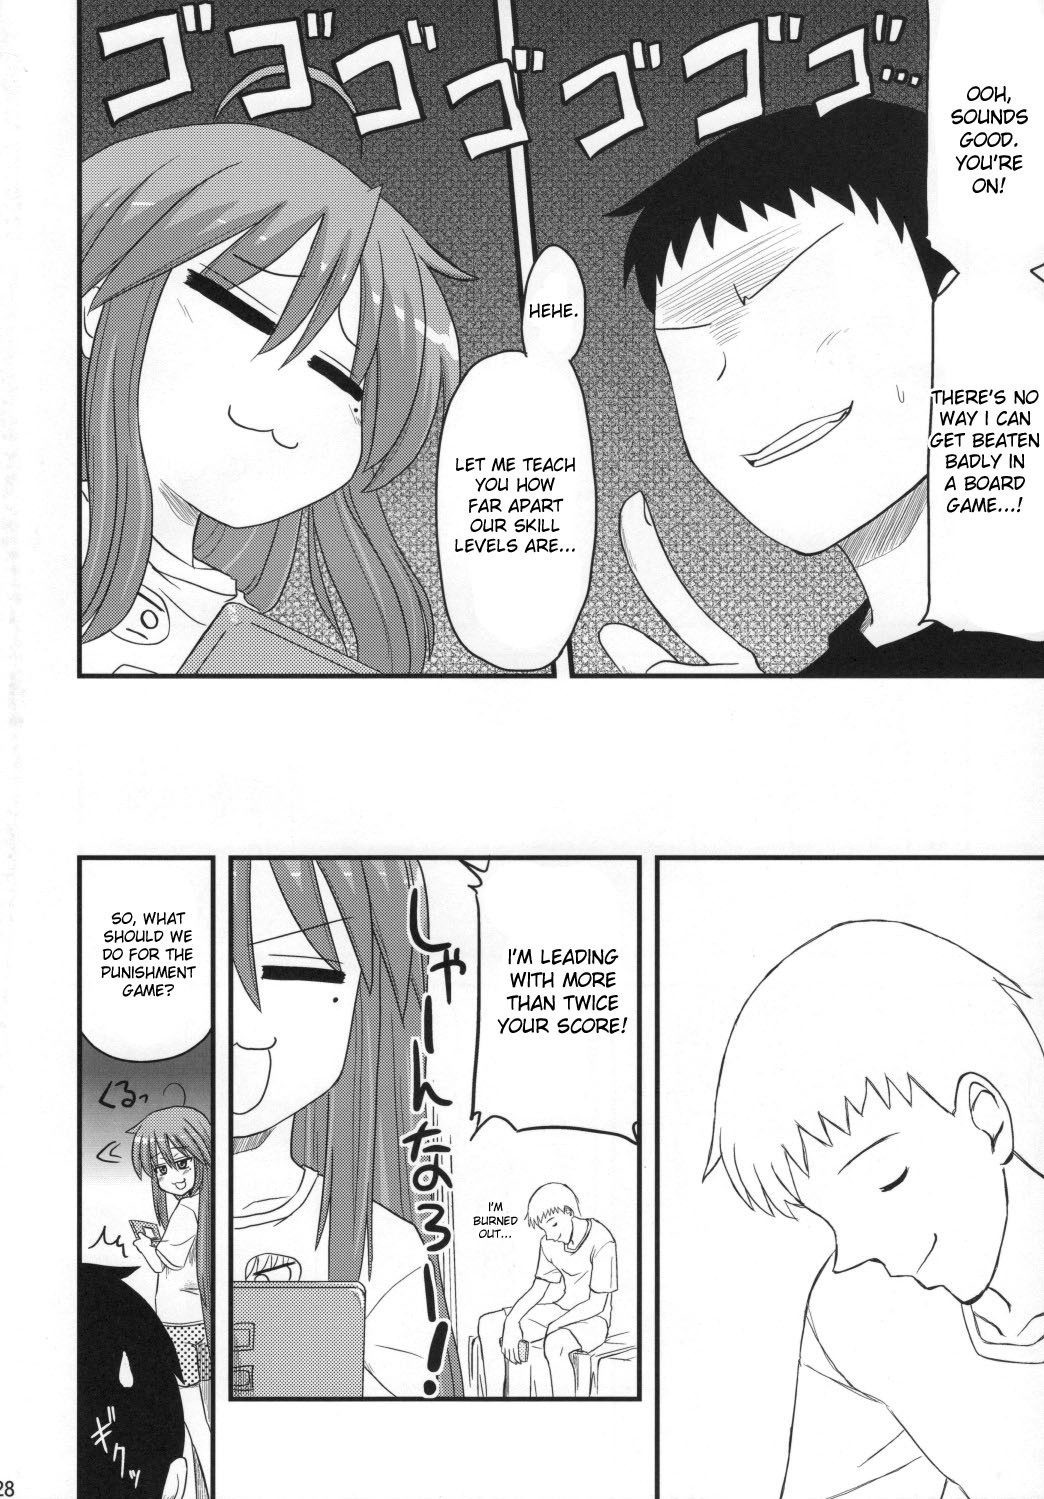 Konata and Oh-zu 4 people each and every one + 1 hentai manga picture 24